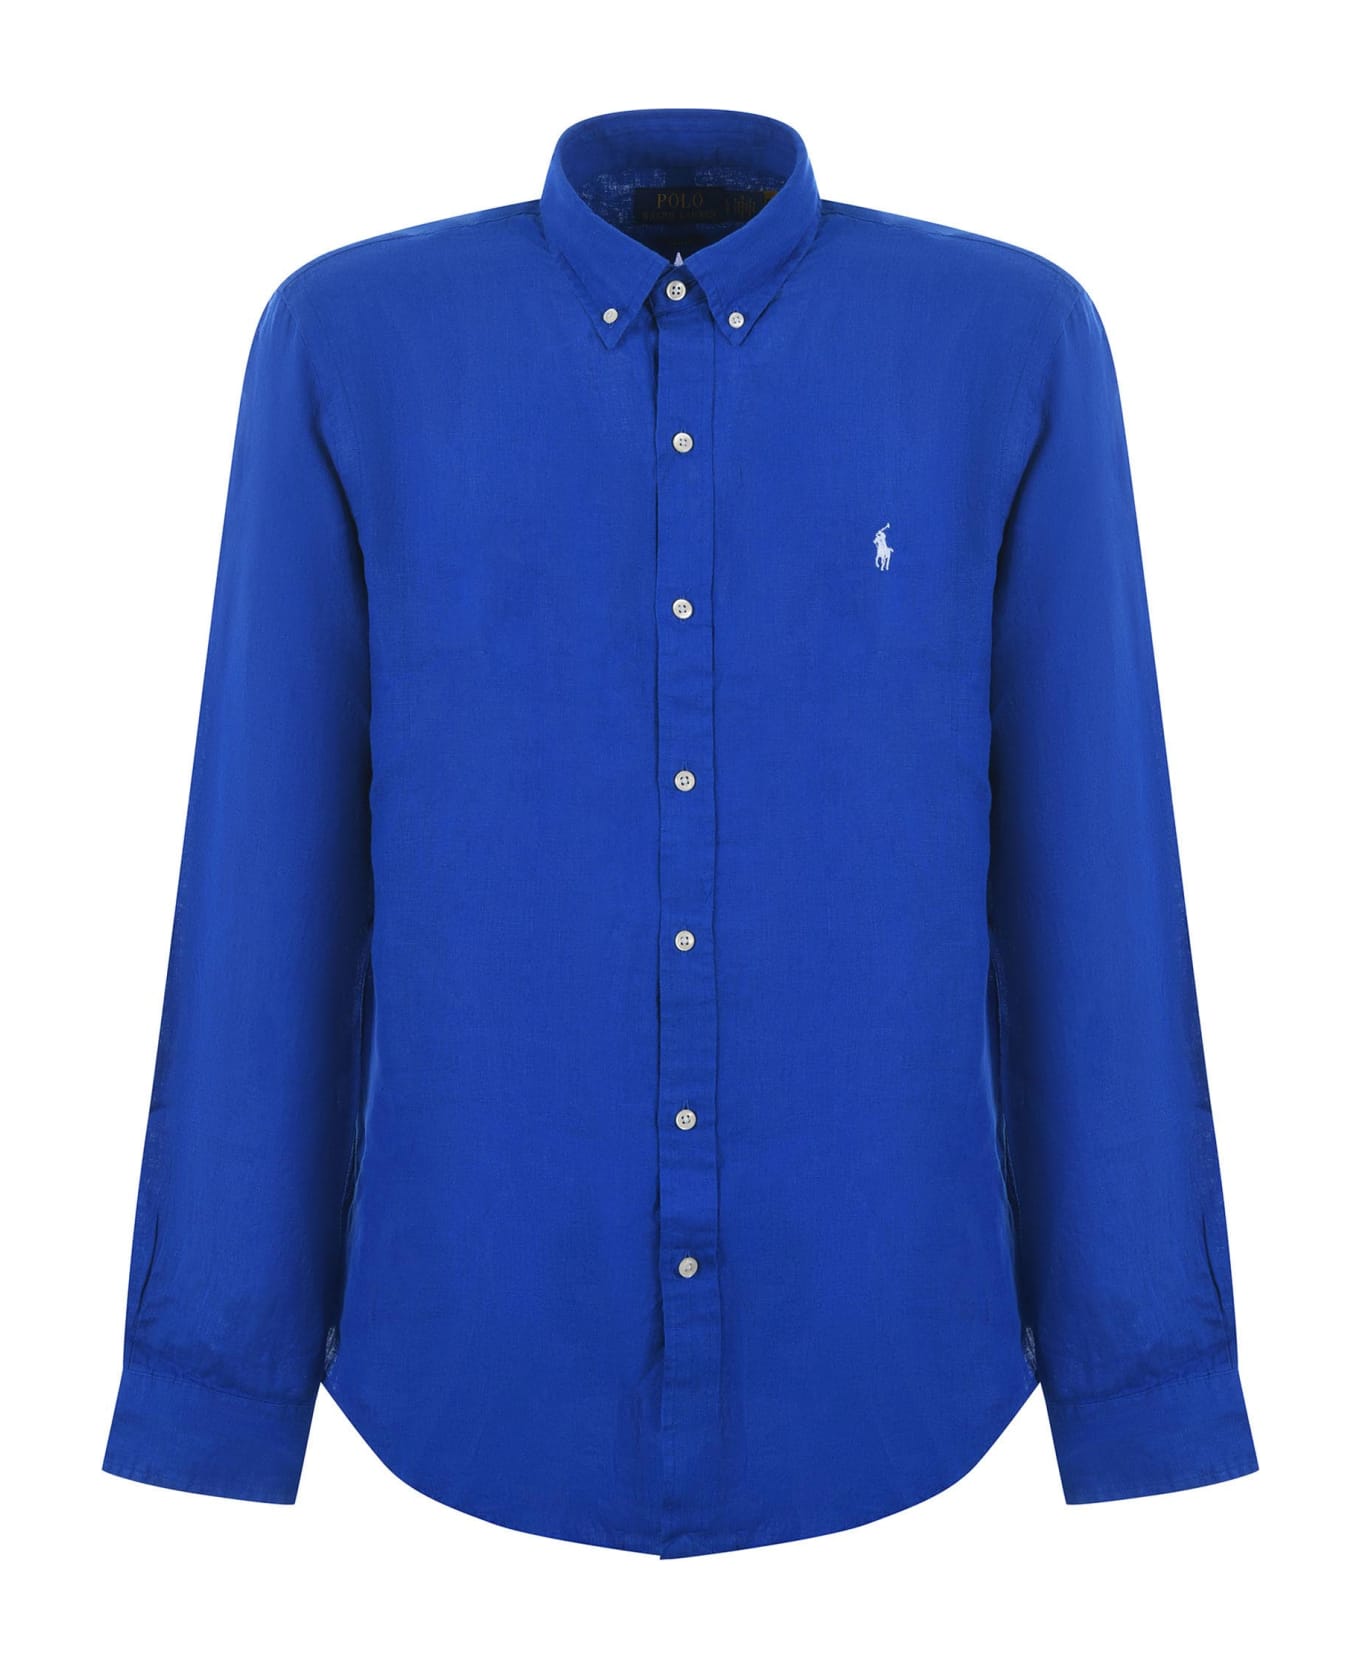 Polo Ralph Lauren Shirt - Blu elettrico シャツ